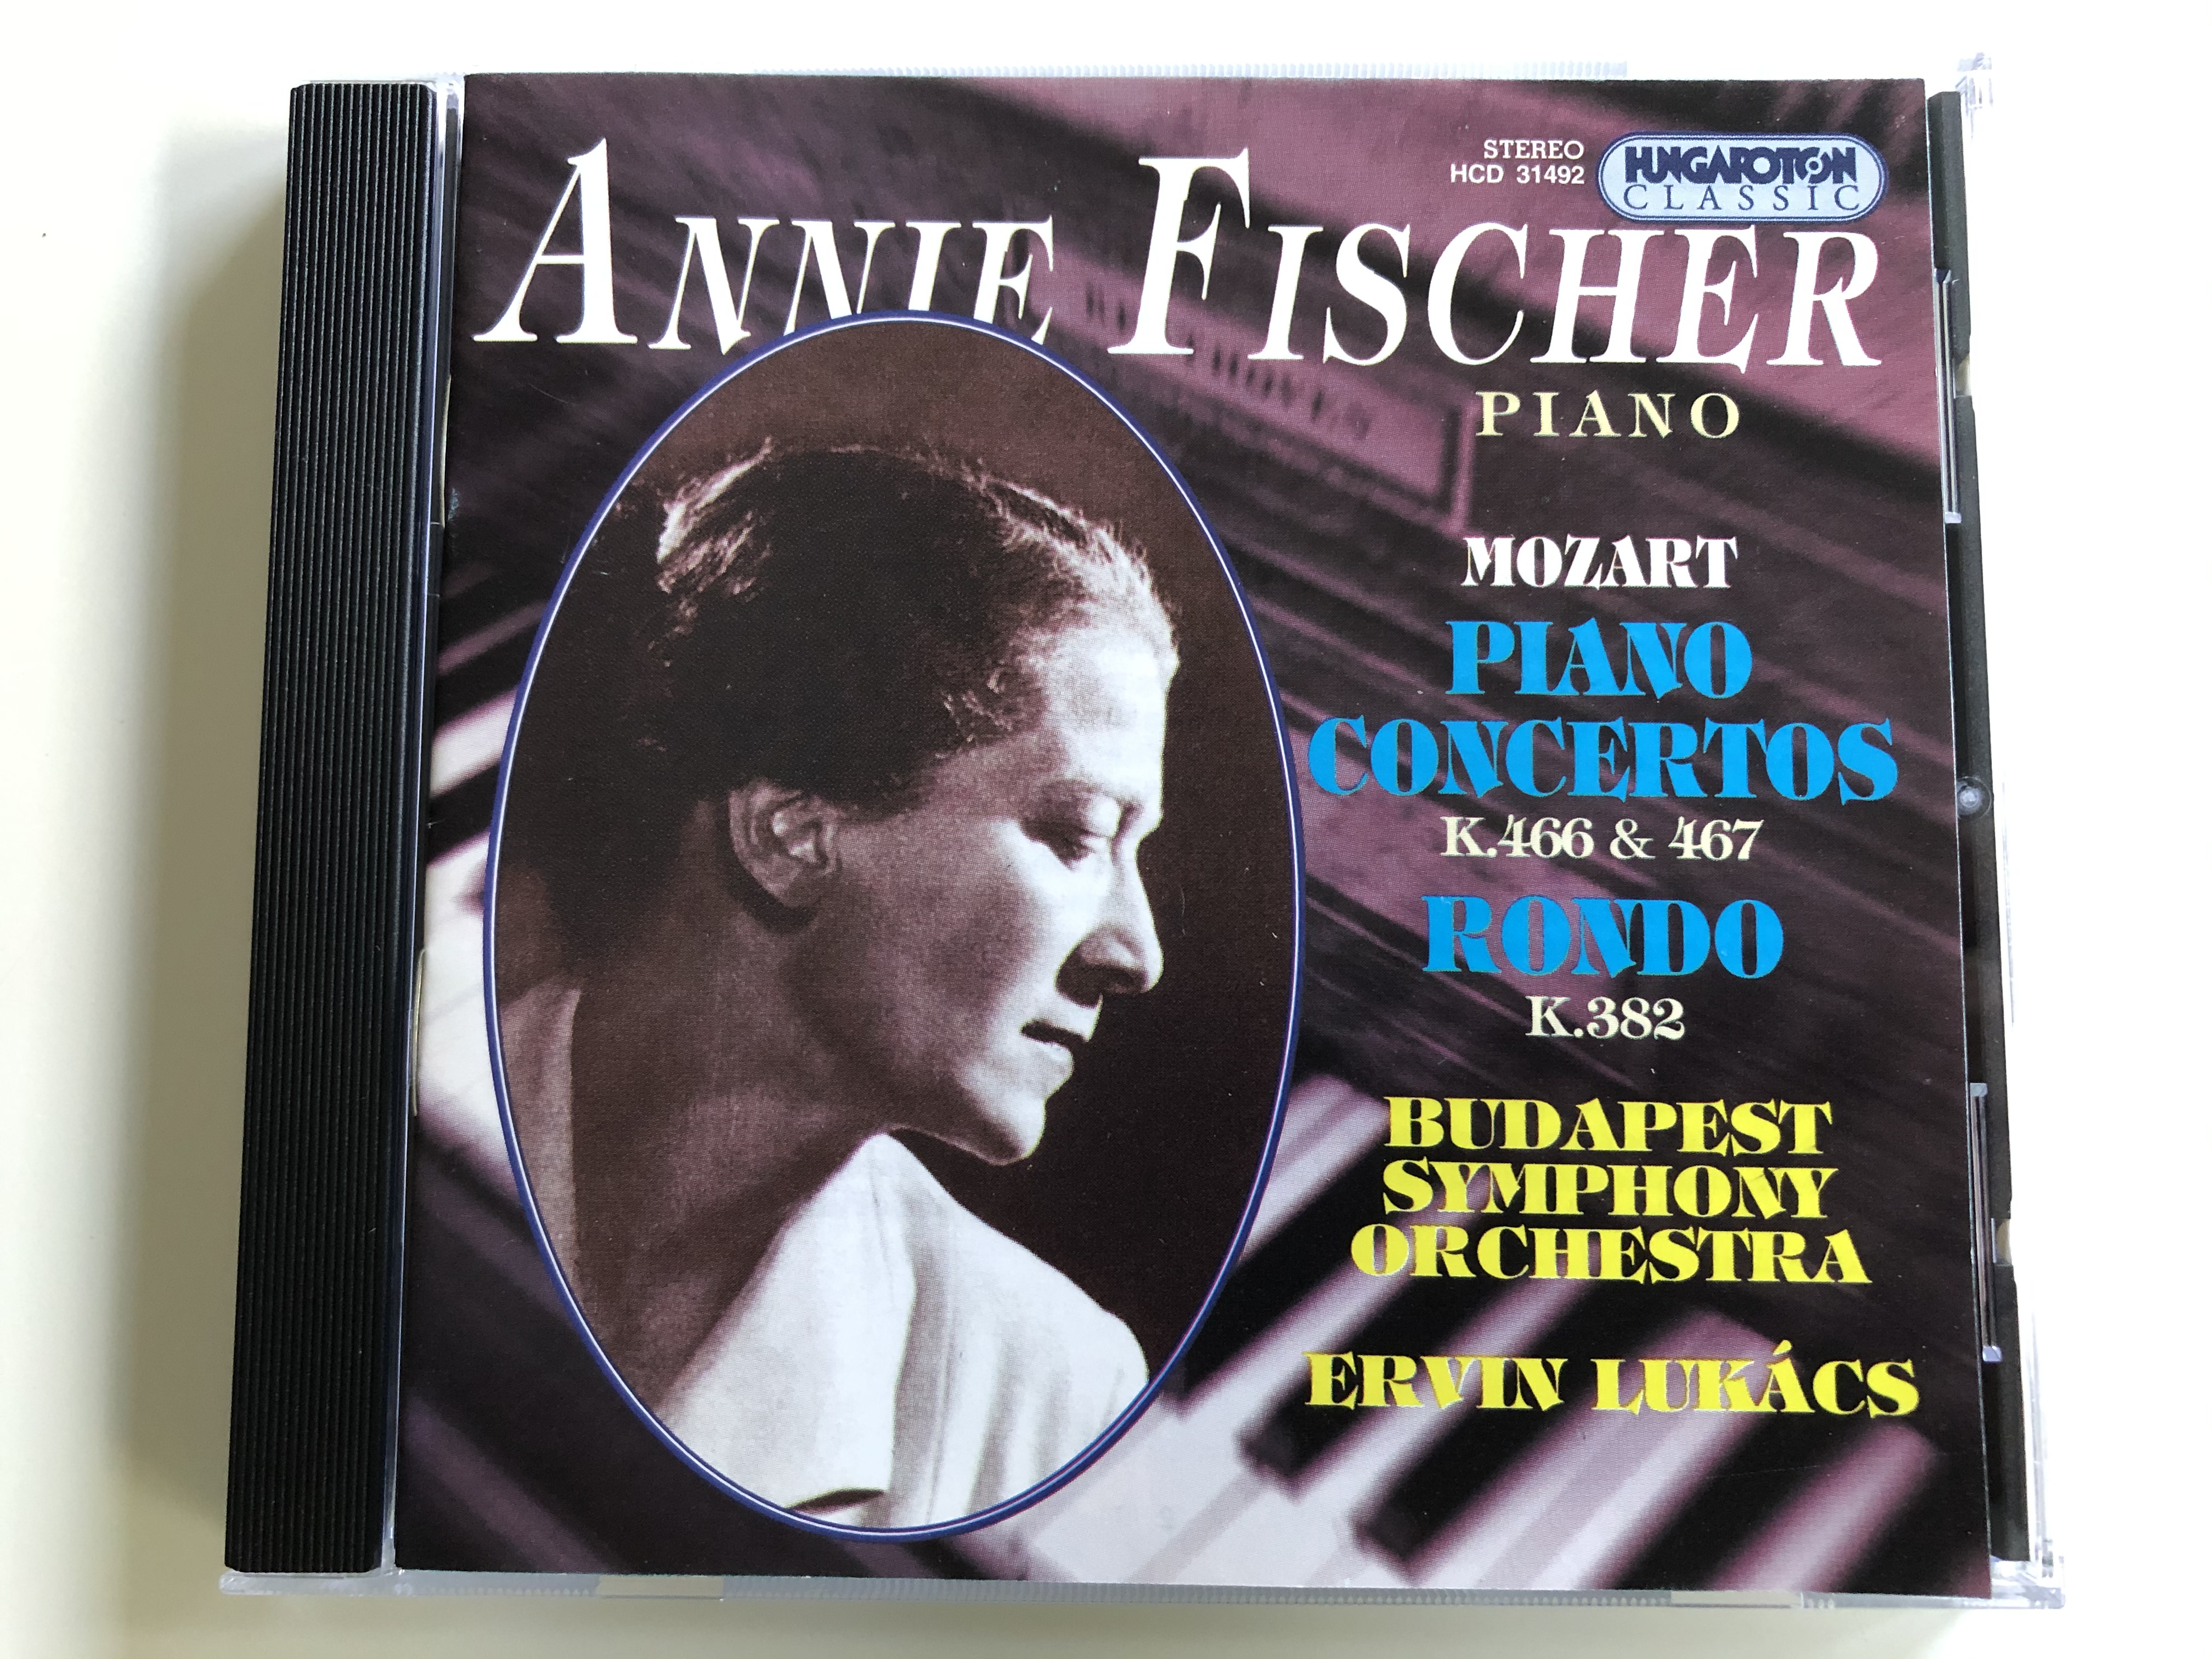 annie-fischer-piano-mozart-piano-concertos-k.466-467-rondo-k.382-budapest-symphony-orchestra-ervin-luk-cs-hungaroton-classic-audio-cd-1994-stereo-hcd-31492-1-.jpg